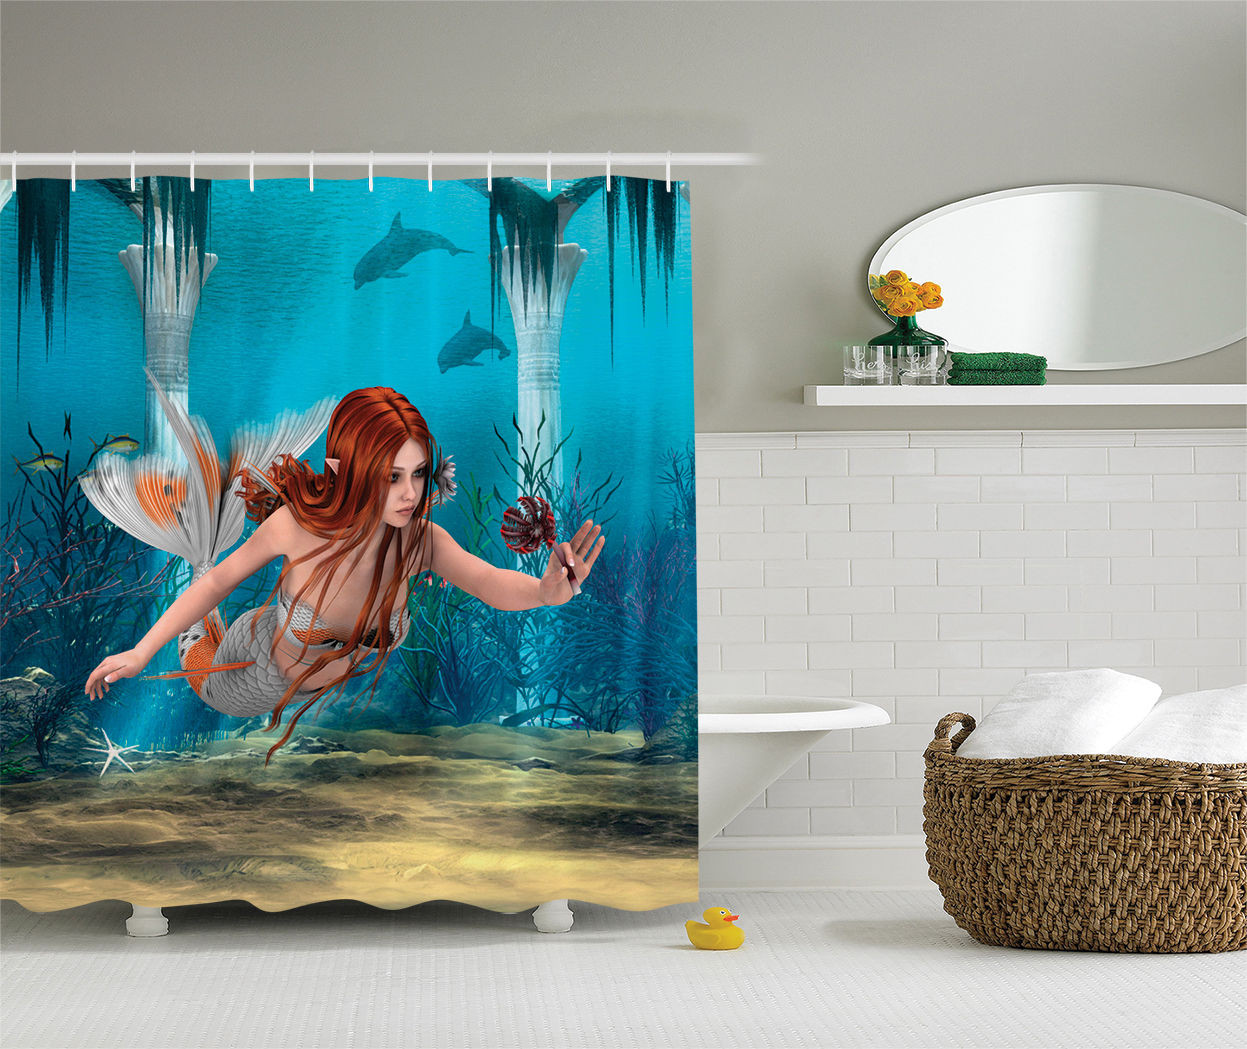 Mermaid Bathroom Decor
 Mermaid Decor Lifelike Mermaid Holding A Sea Lily Magic